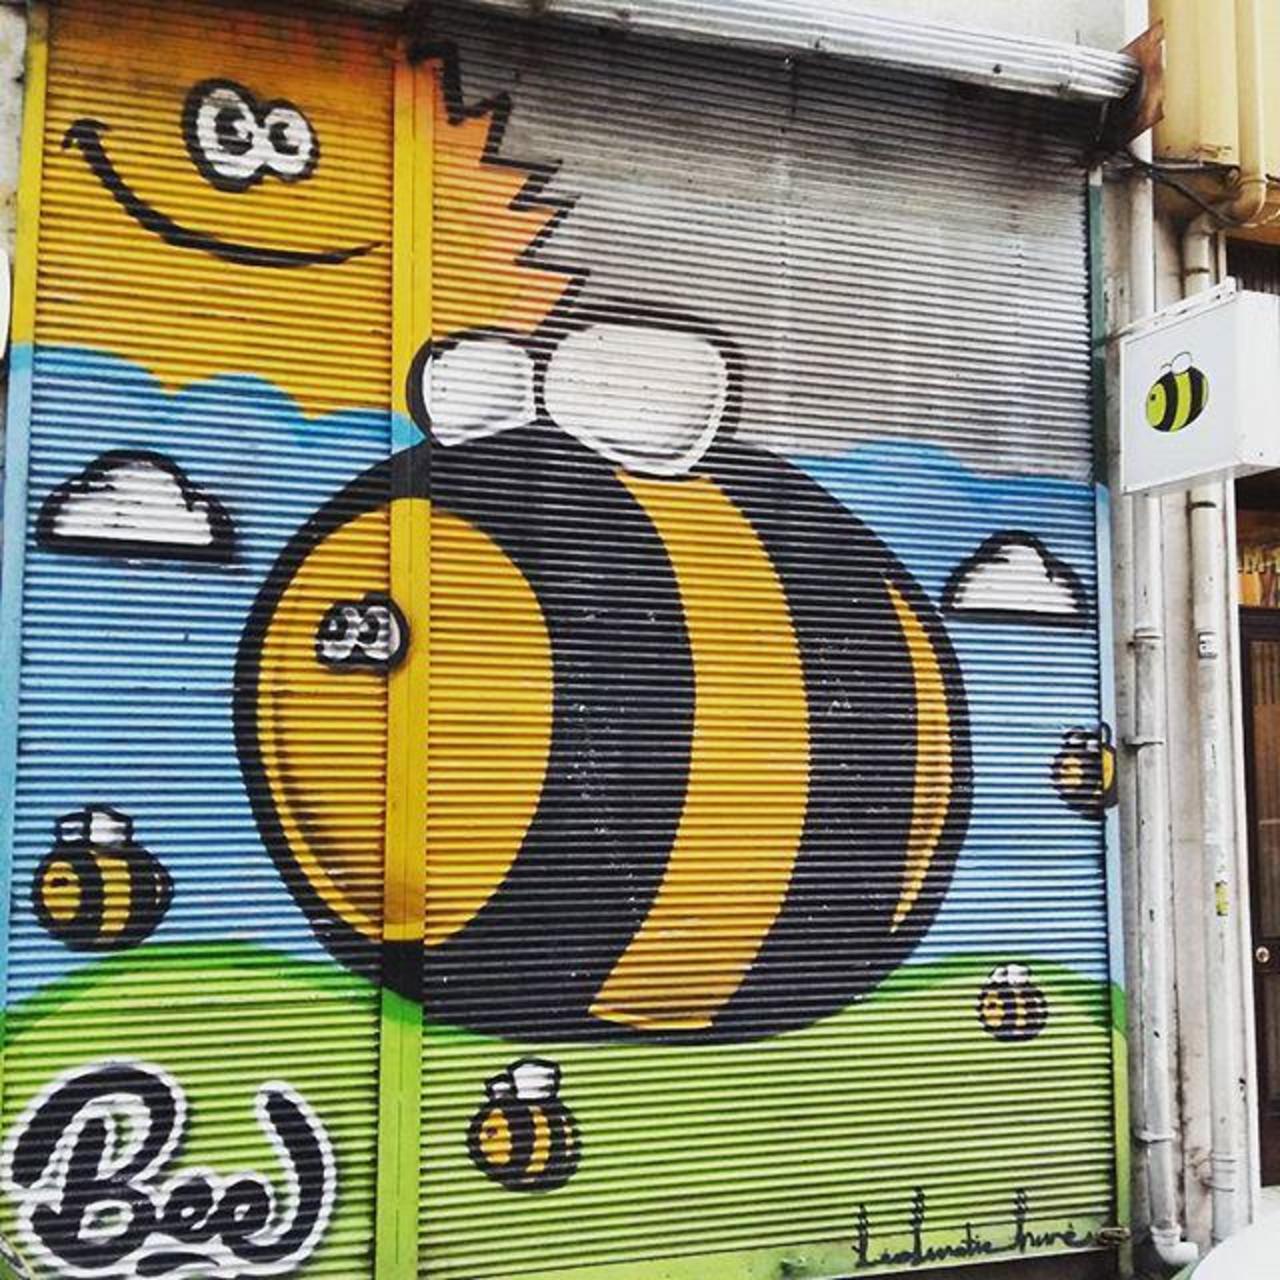 RT @StArtEverywhere: #bee @dsb_graff #dsb_graff @rsa_graffiti #streetart #urbanart #graffitiart #graffiti #streetartistry  #instagraffit… http://t.co/UlpZ5r9WUs